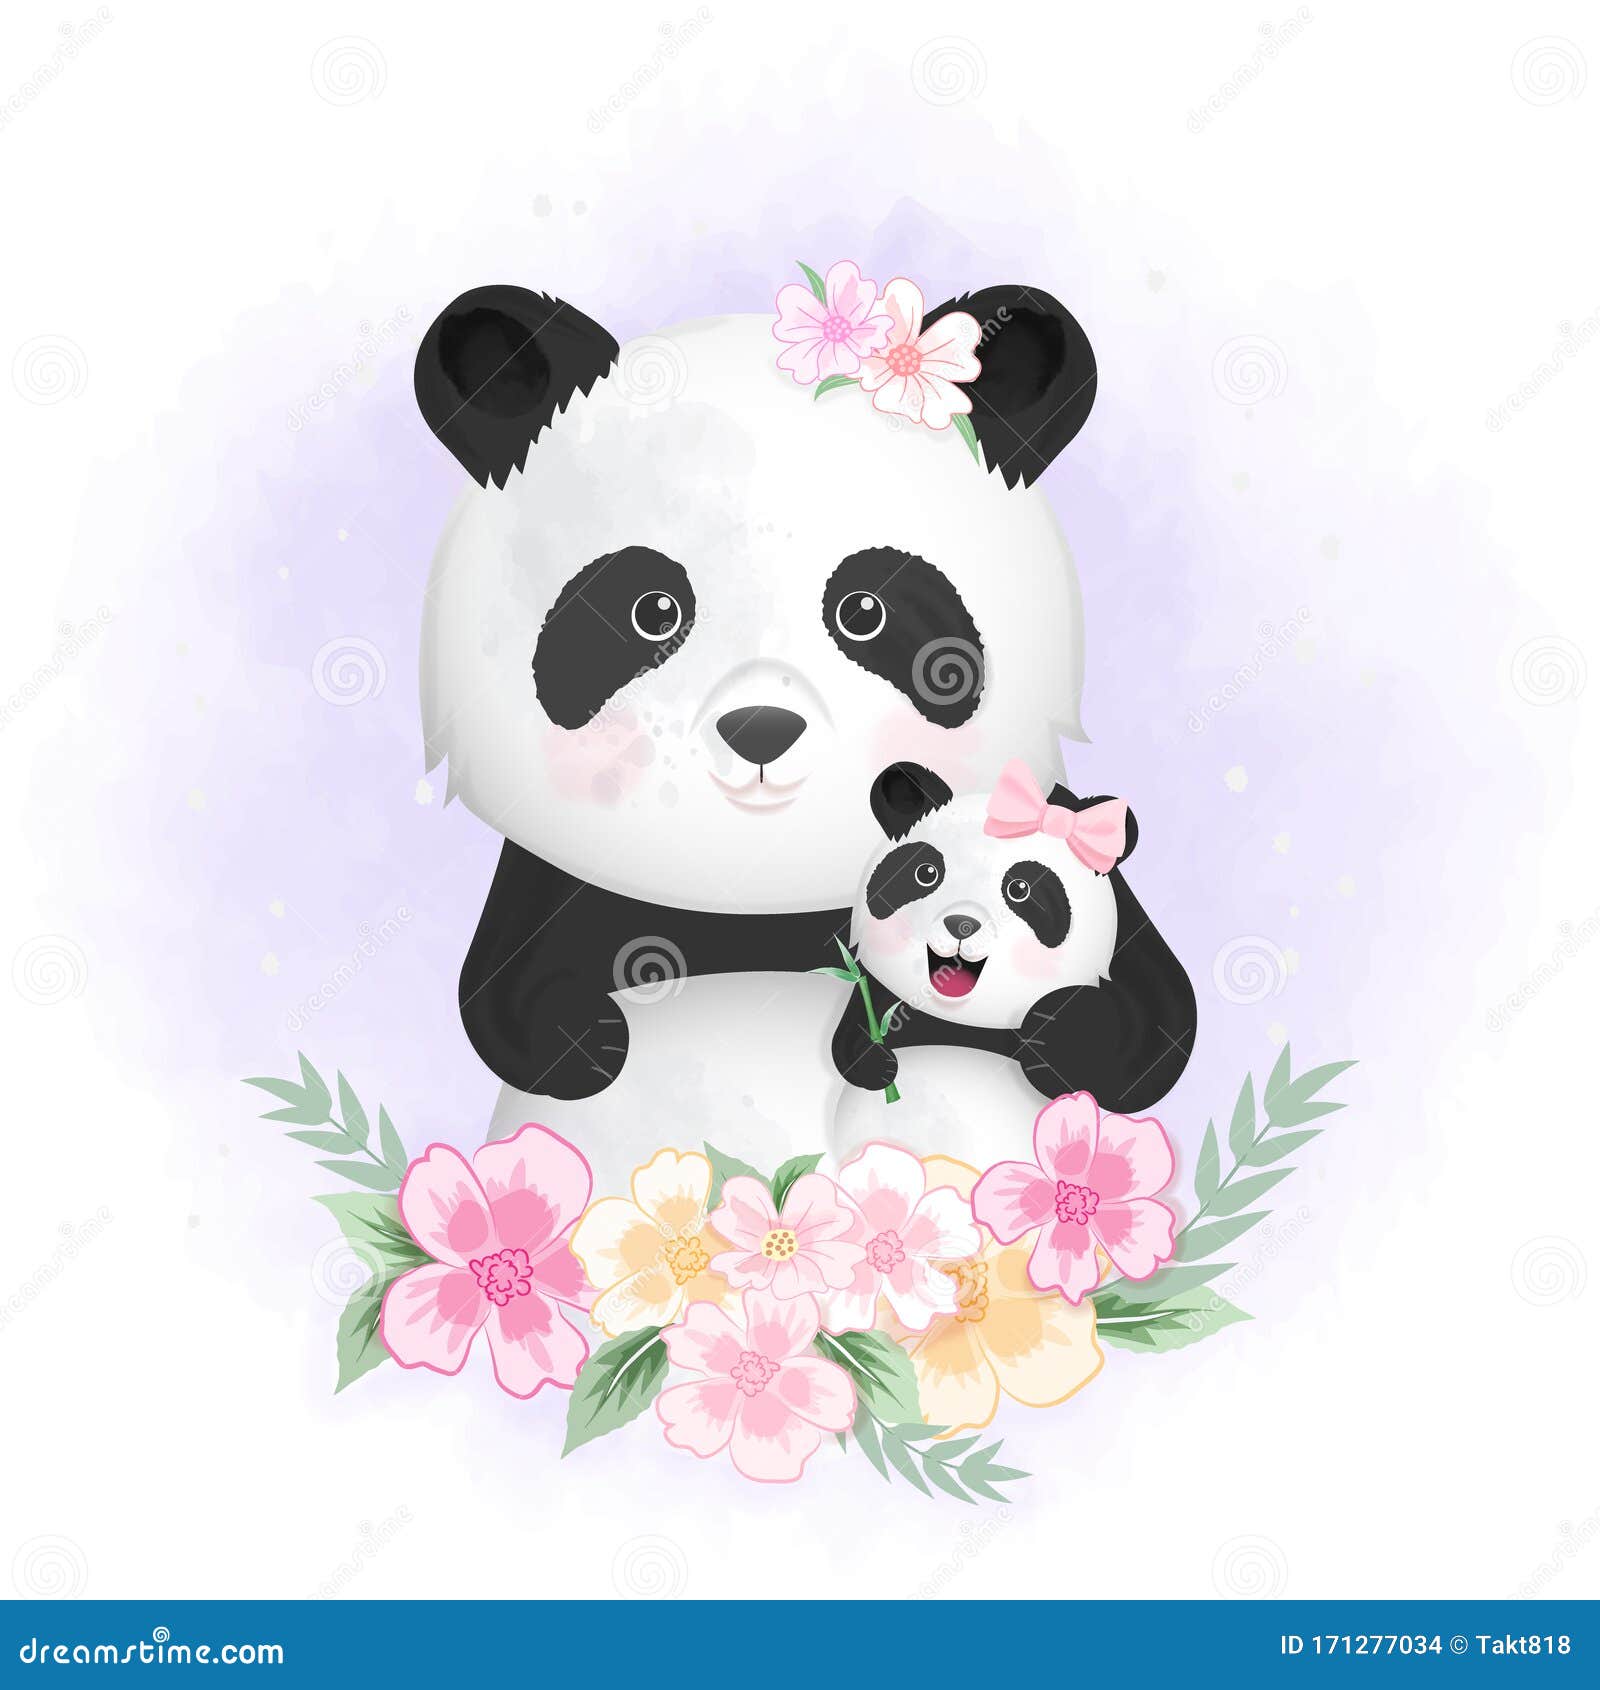 Cute Baby Panda and Mom Hand Drawn Cartoon Animal Illustration Watercolor  Stock Vector - Illustration of happy, love: 171277034